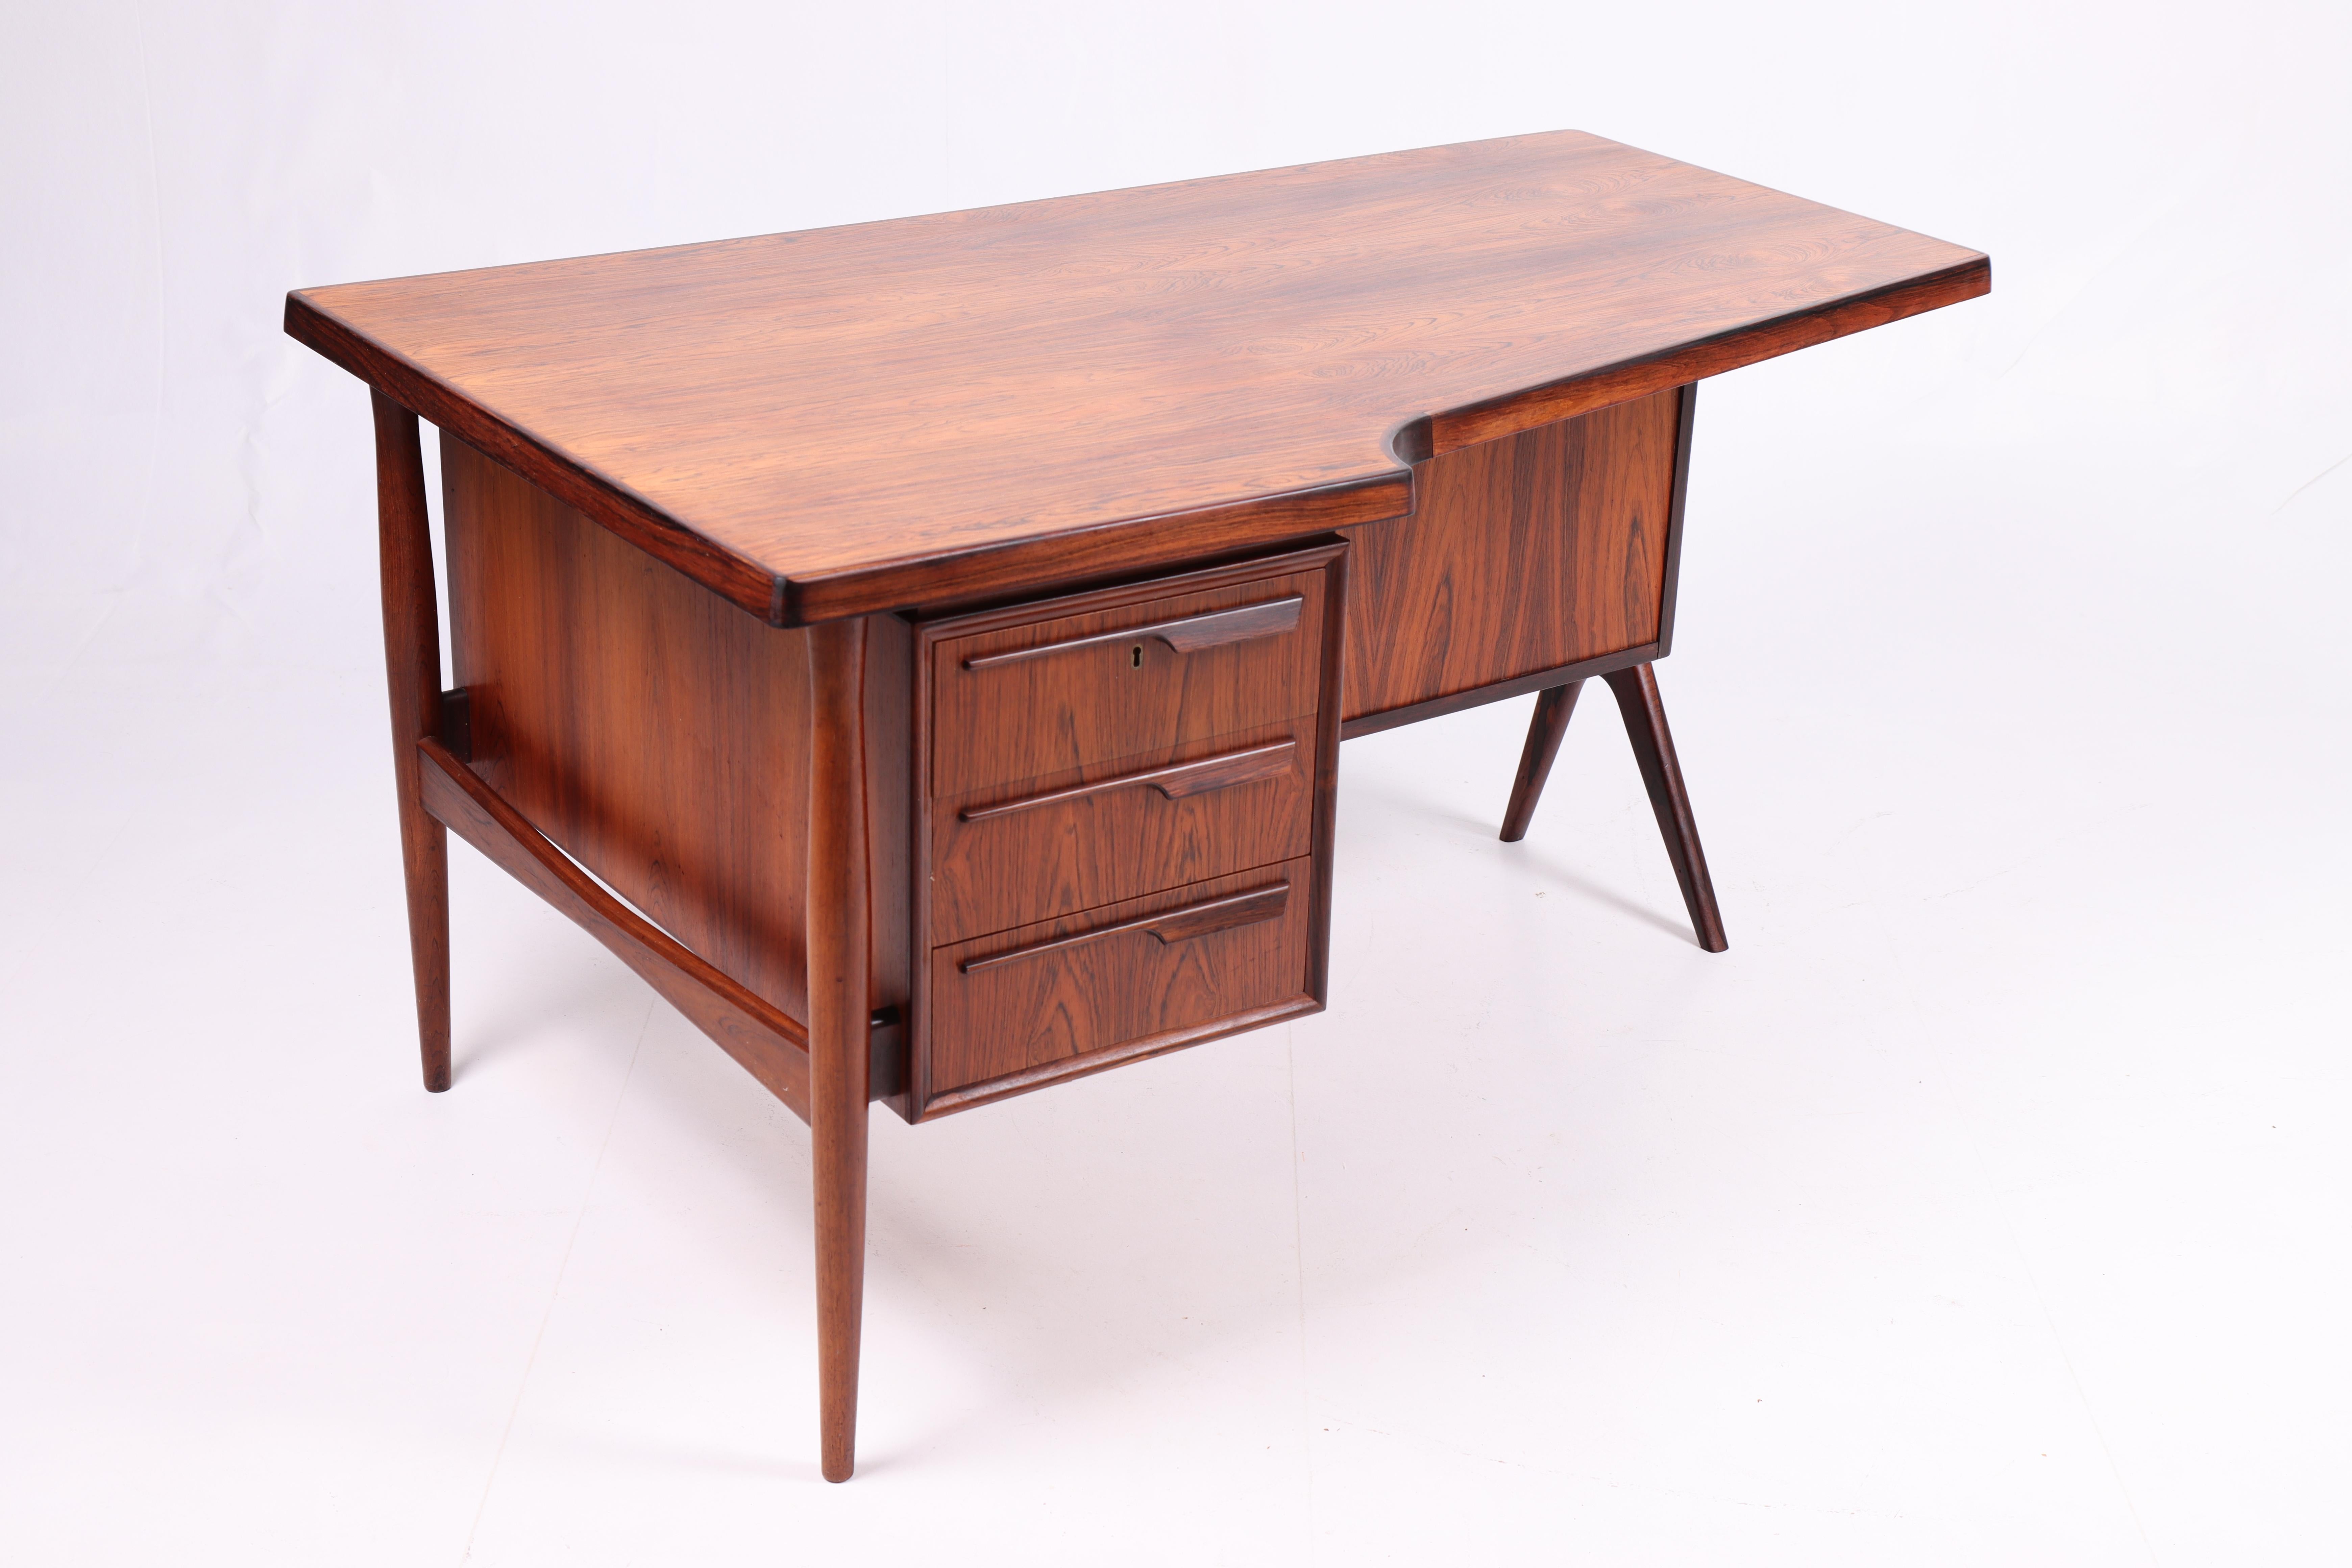 Scandinavian Modern Midcentury Desk in Rosewood, Made in Denmark 1960s For Sale